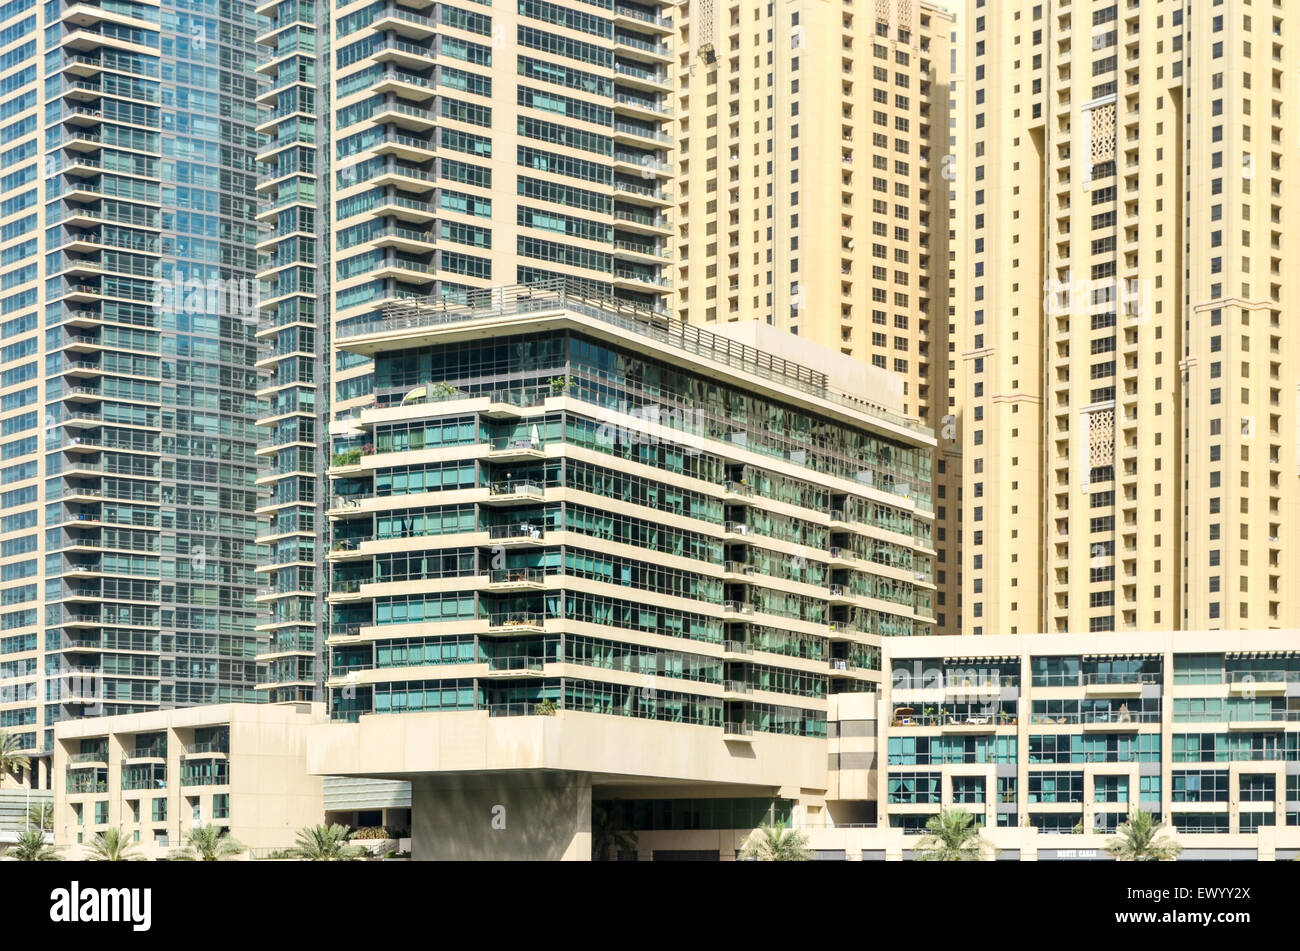 Windows of modern high rise buildings, towers and hotels of the Dubai Marina, United Arab Emirates Stock Photo